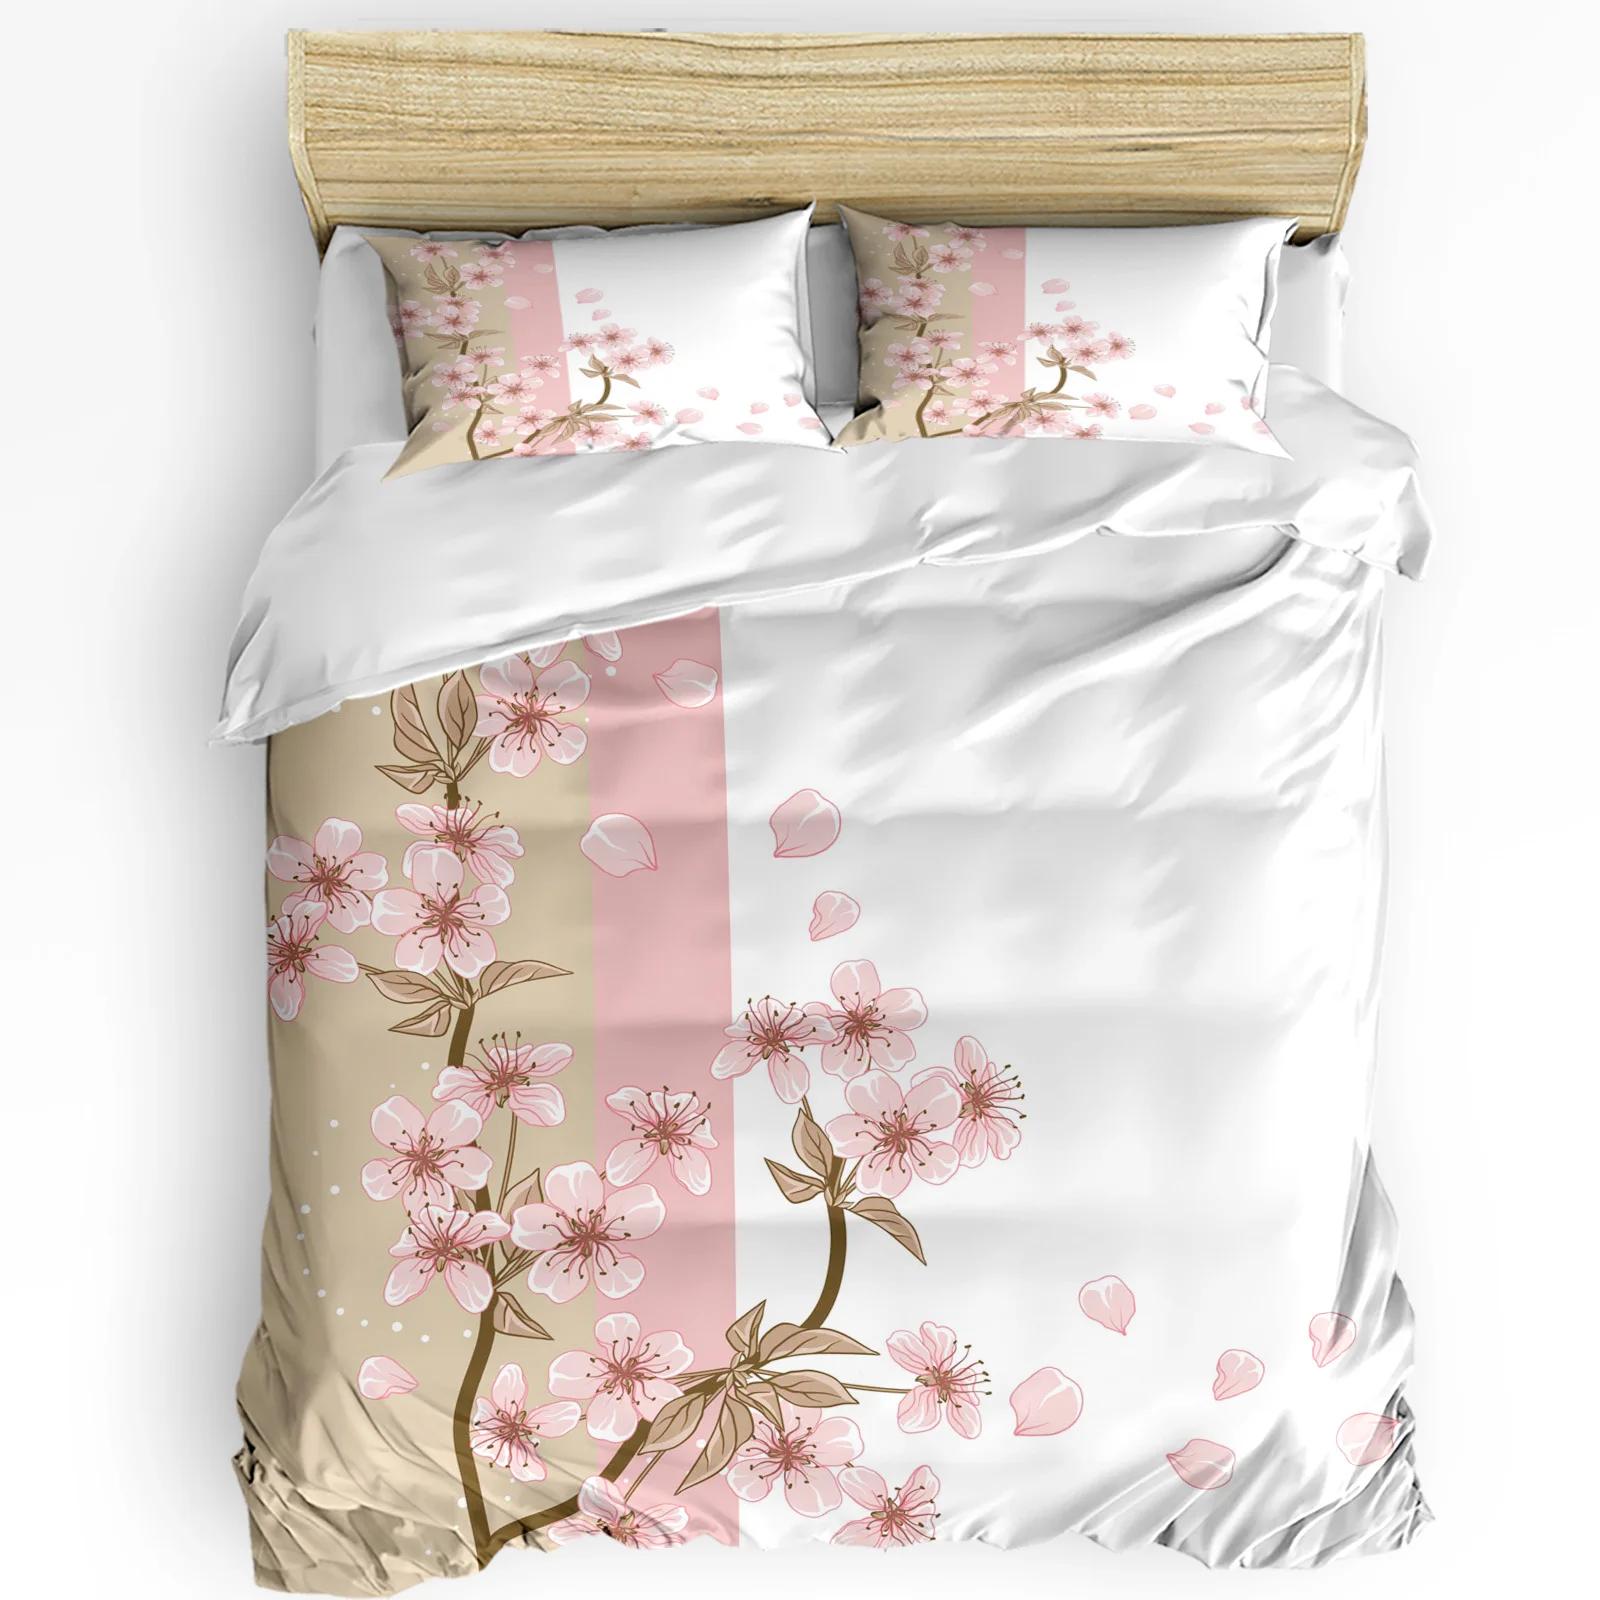 Peach Blossom Petals Leaves Flower Bedding Set 3pcs Duvet Cover Pillowcase Kids Adult Quilt Cover Double Bed Set Hom